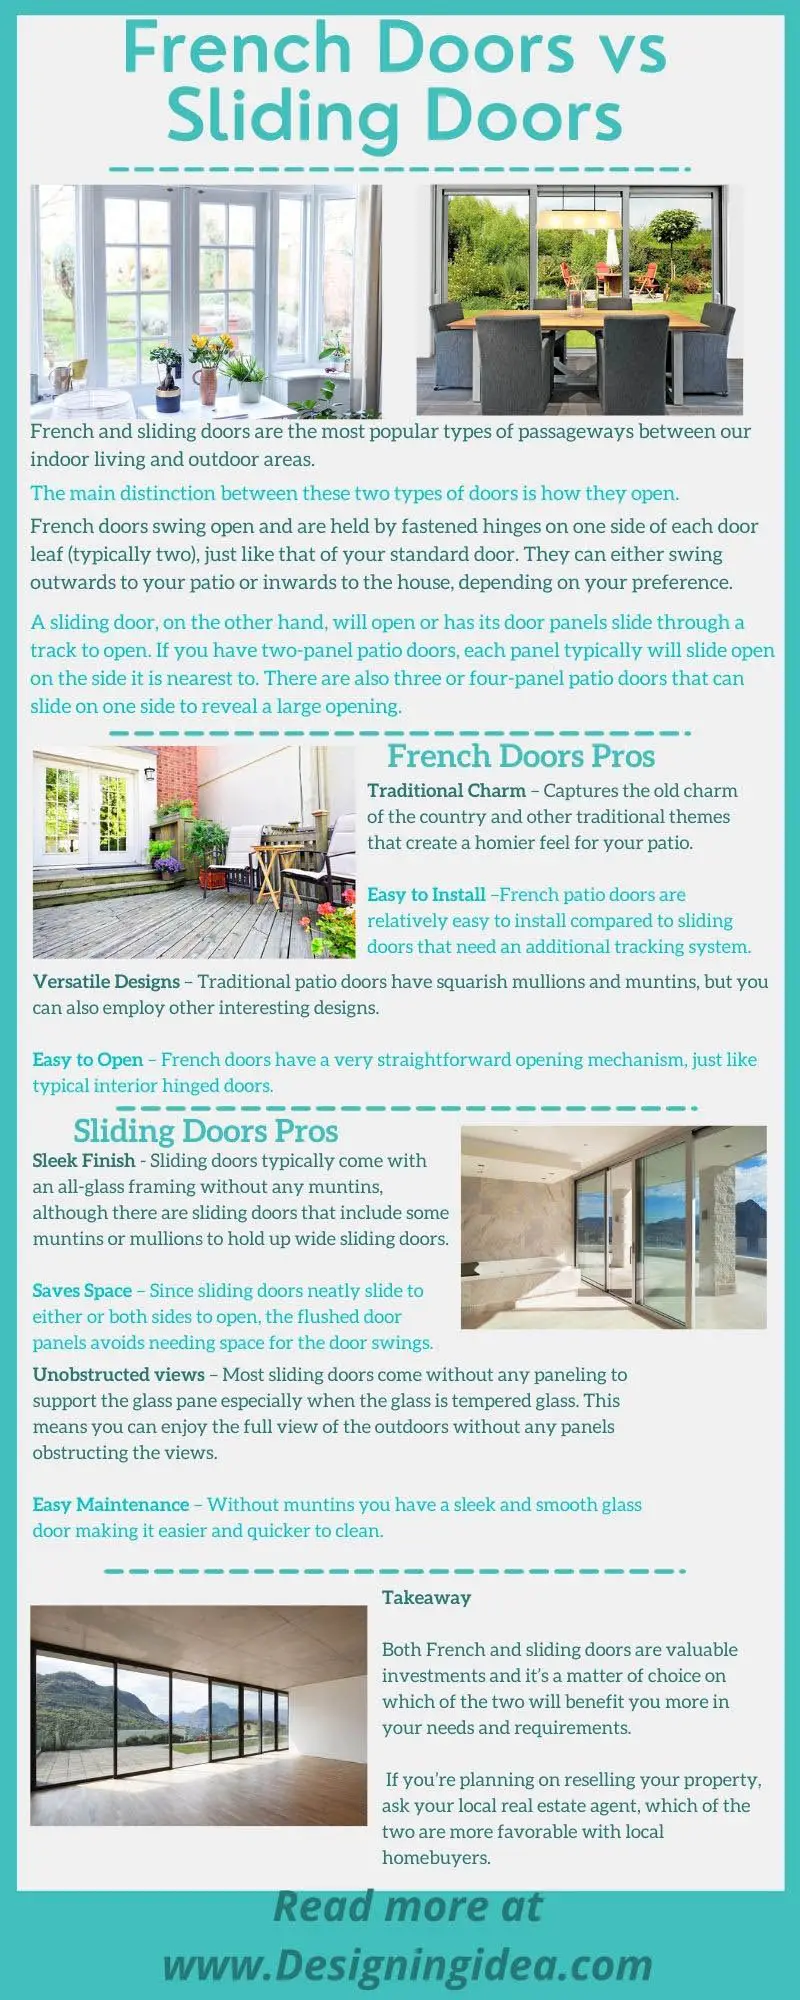 French doors vs sliding doors infographic